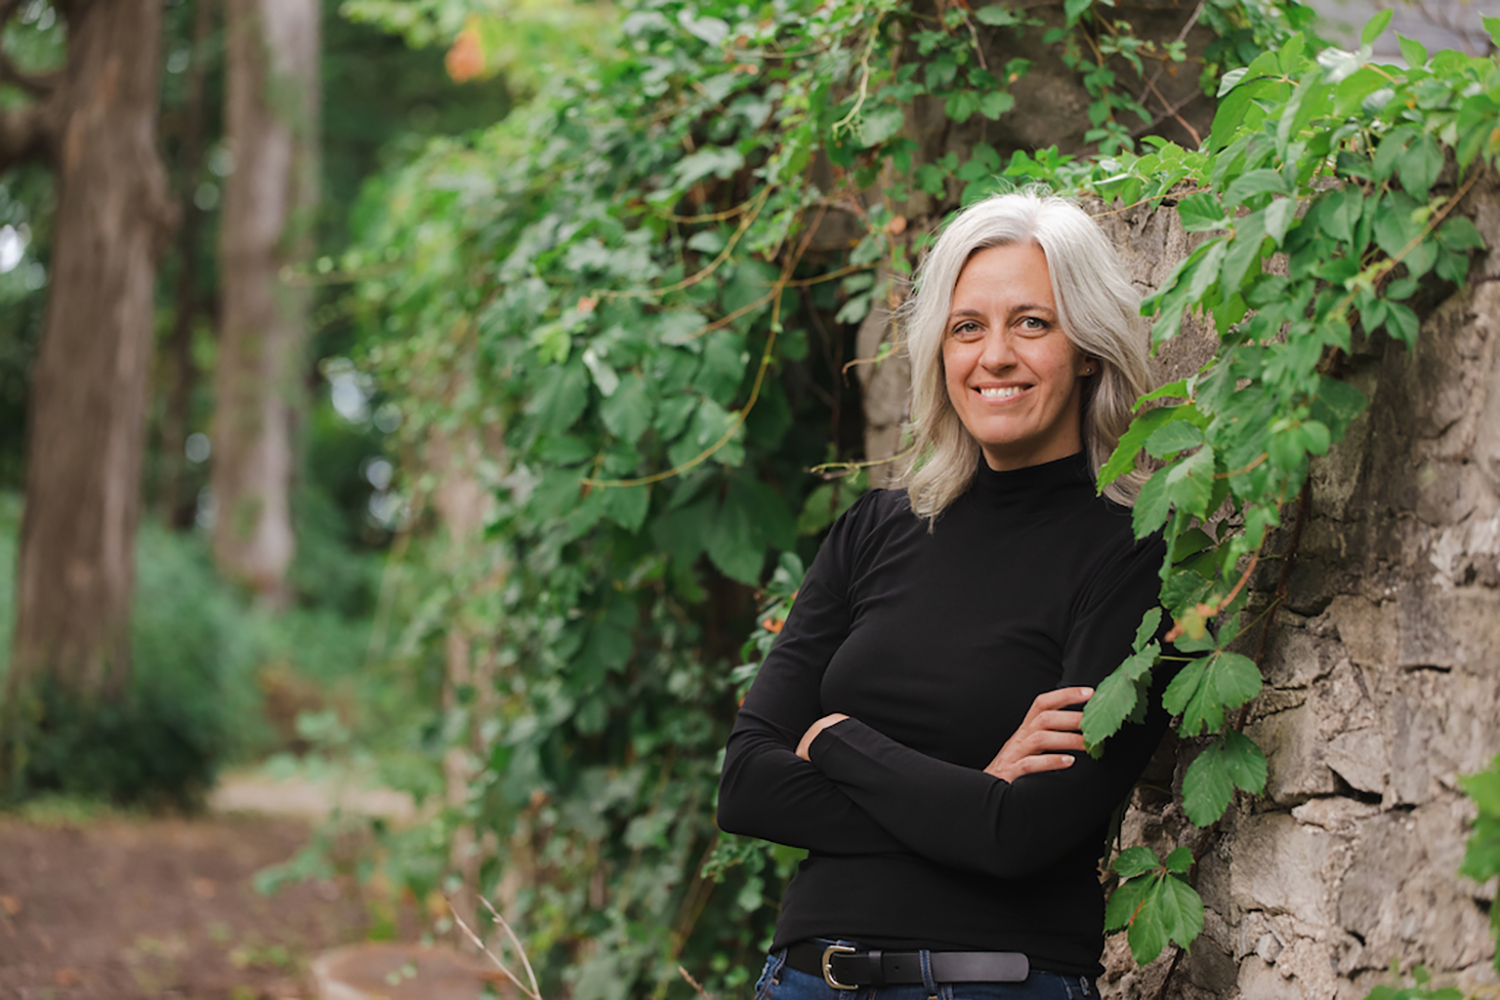 Rachel Rensink-Hoff, leaning against an ivy-covered wall.